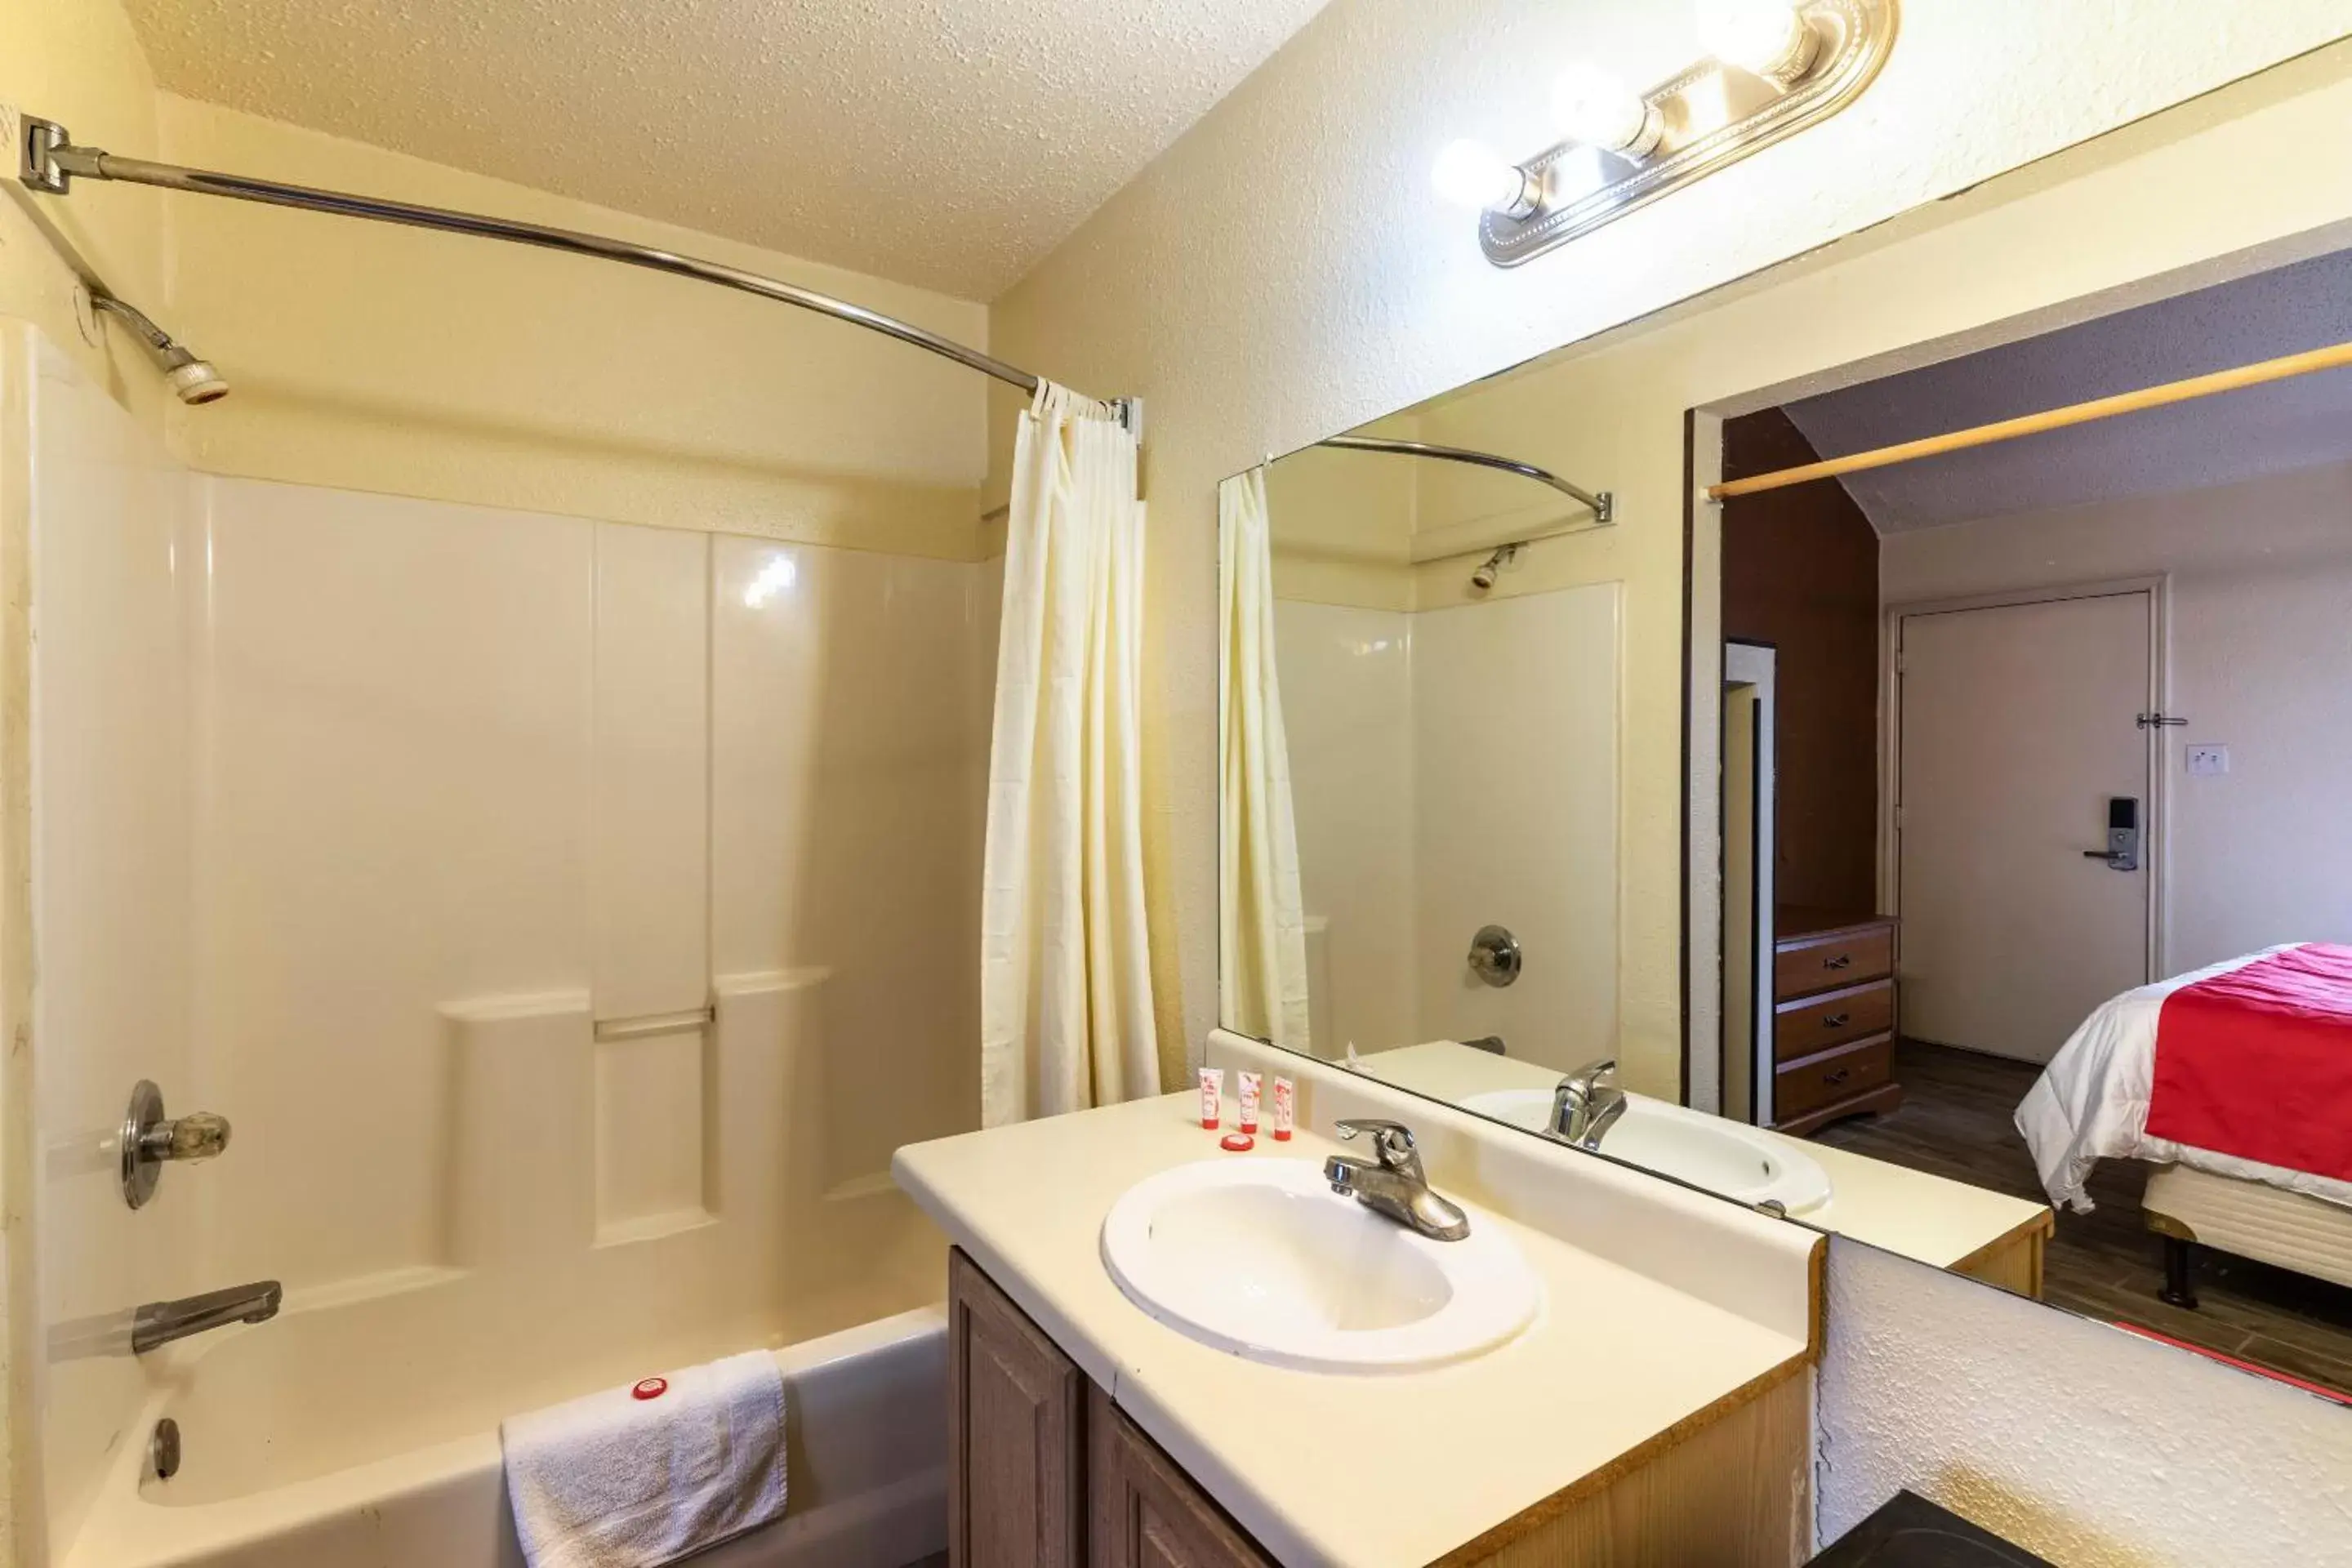 Area and facilities, Bathroom in OYO Hotel Decatur TX Hwy 287 Northwest